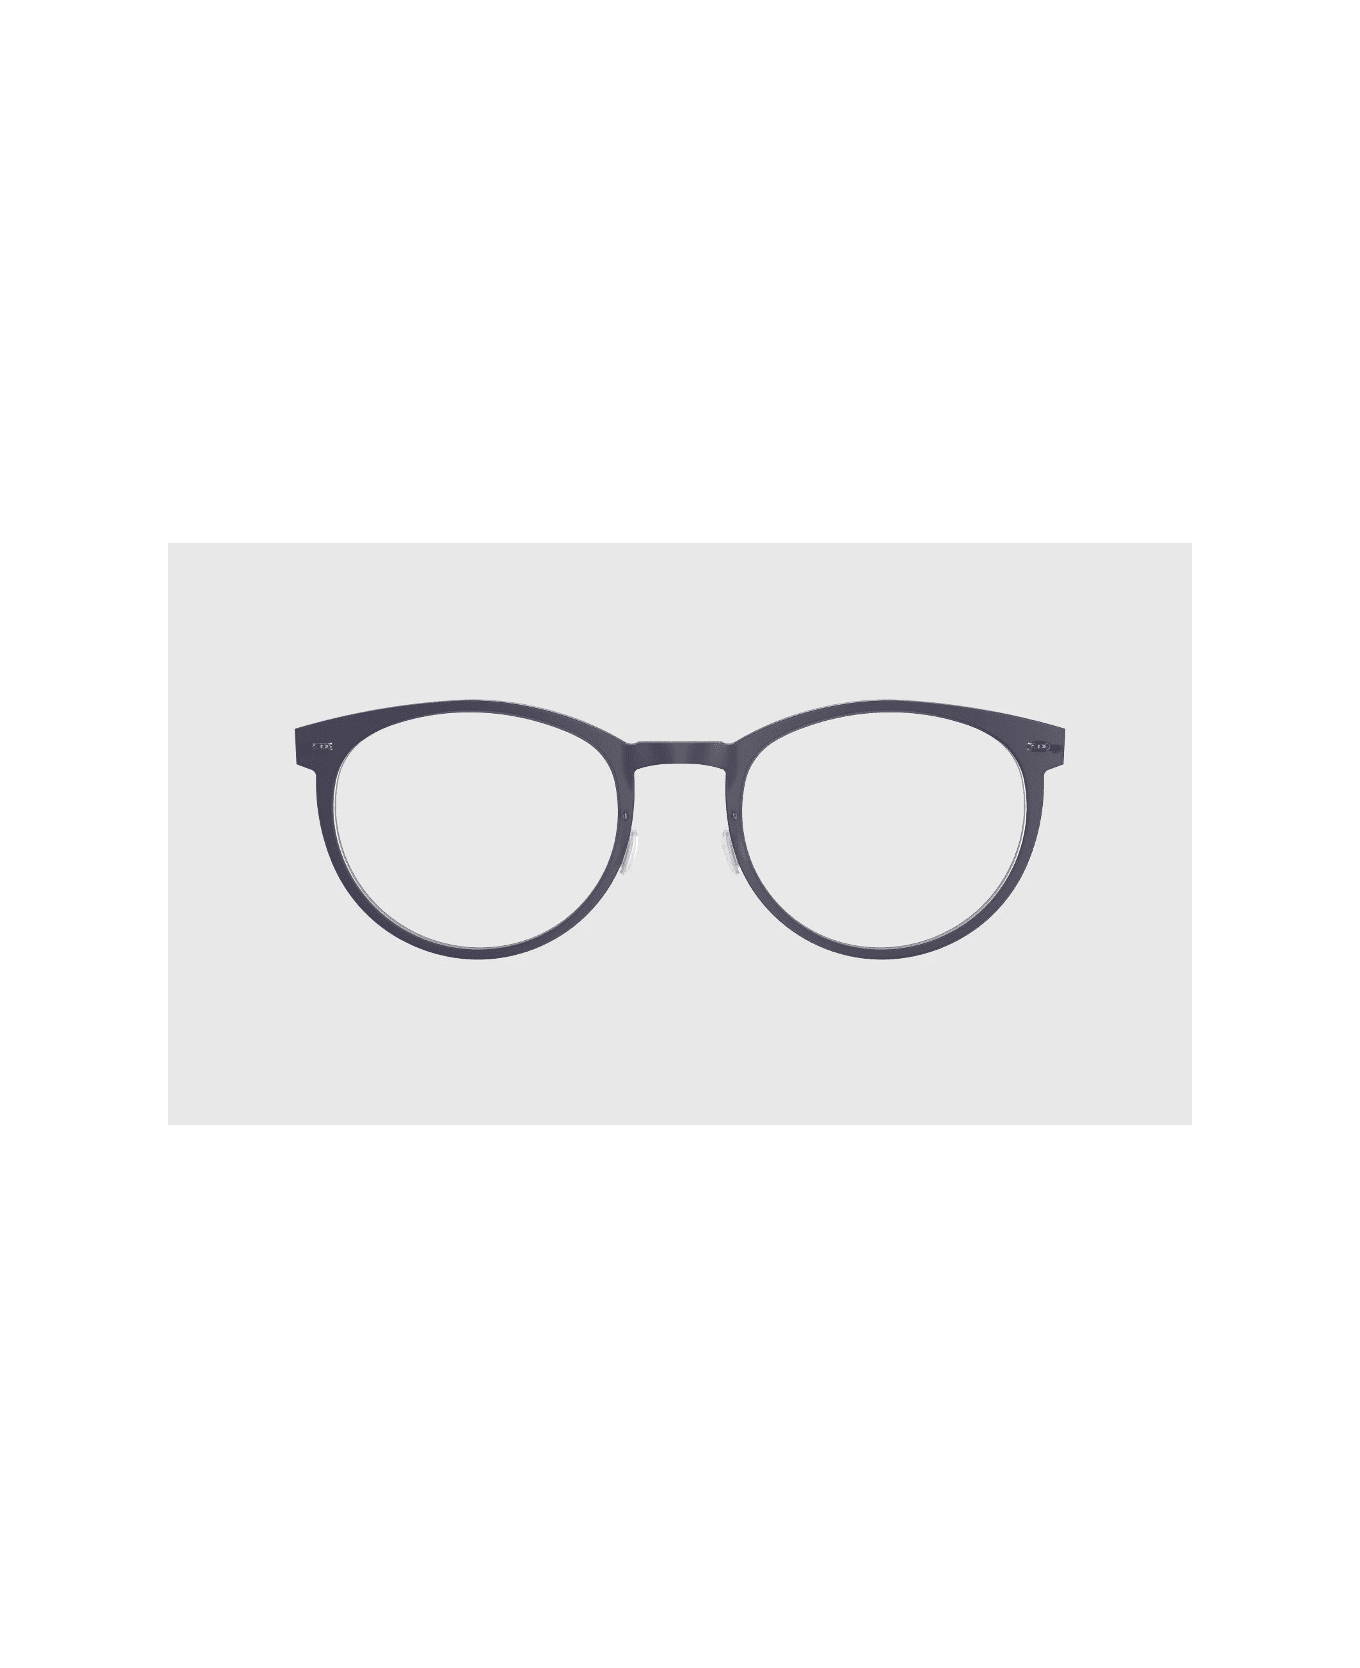 LINDBERG Now 6517 pu16 Glasses - Blu